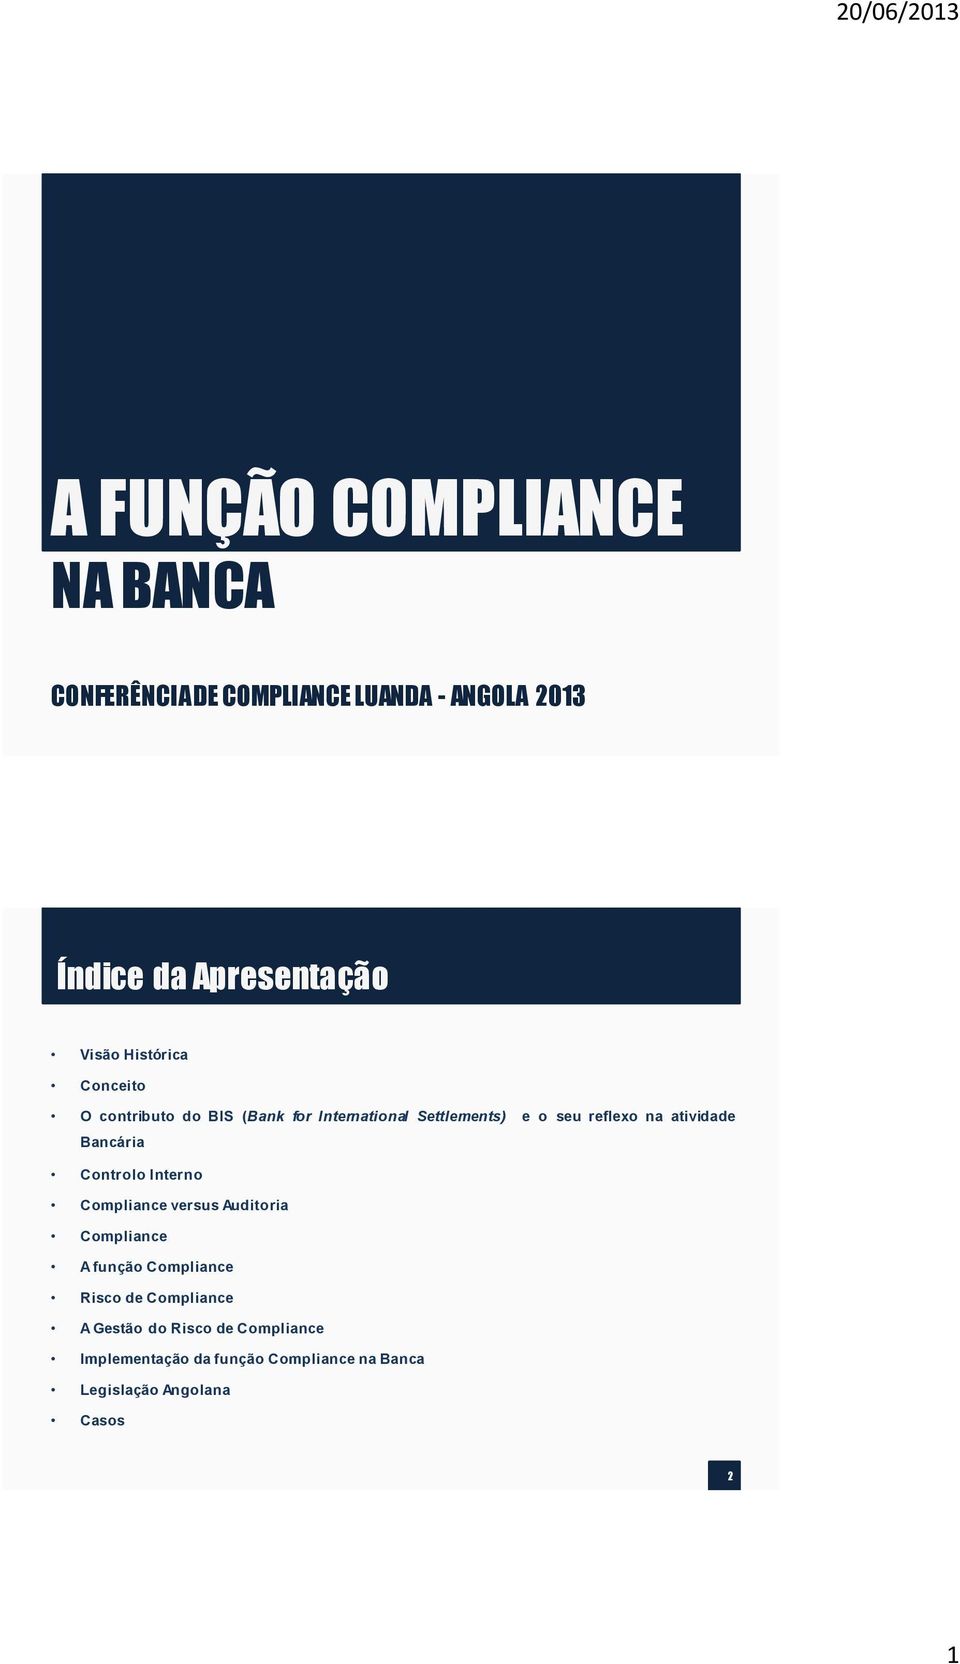 Bancária Controlo Interno Compliance versus Auditoria Compliance A função Compliance Risco de Compliance